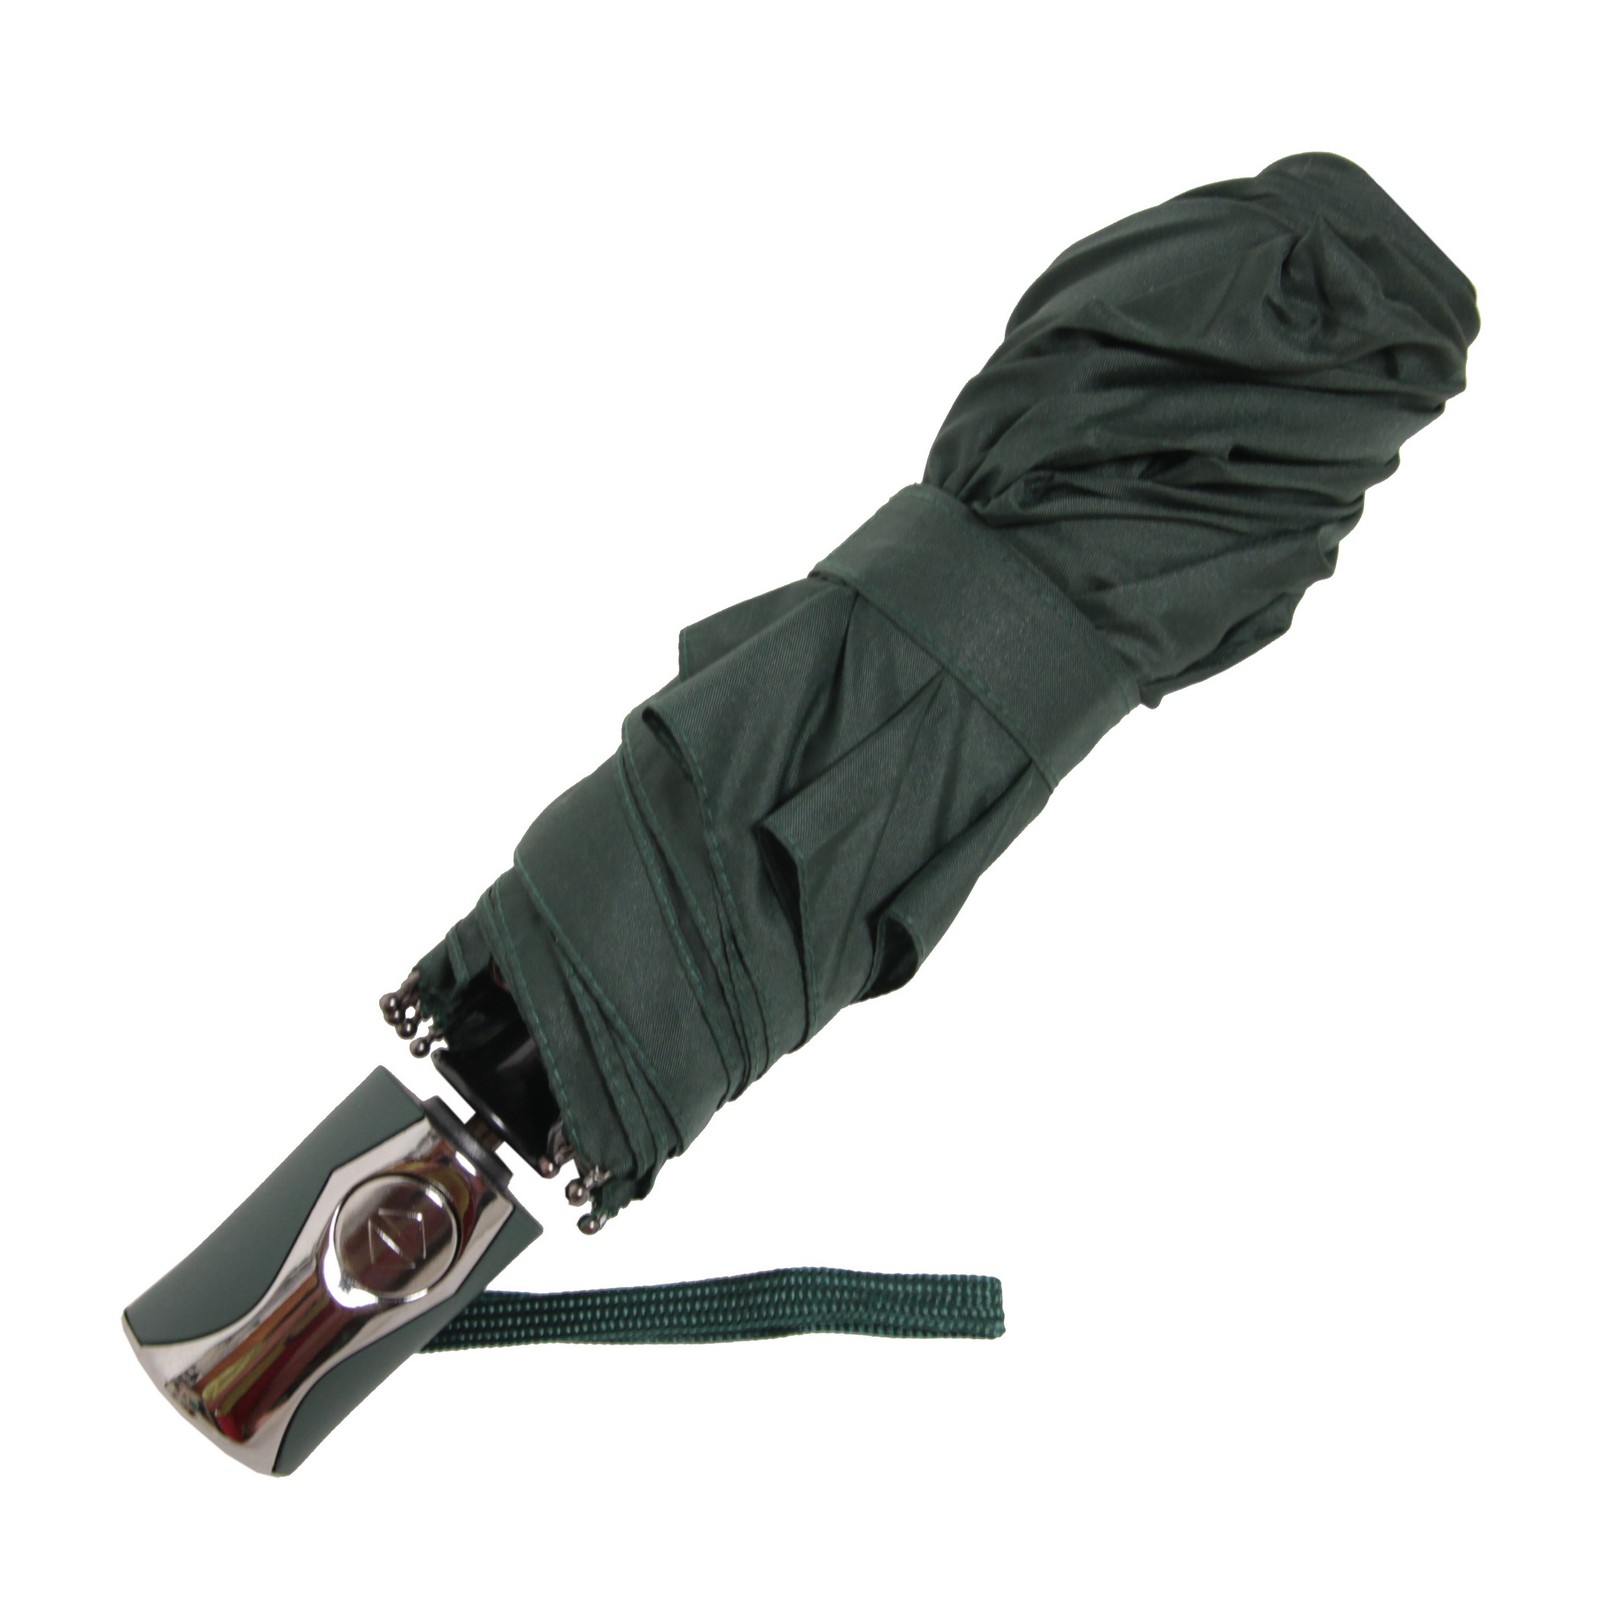 Taschenregenschirm (Knirps) Pilsner Urquell – dunkelgrün